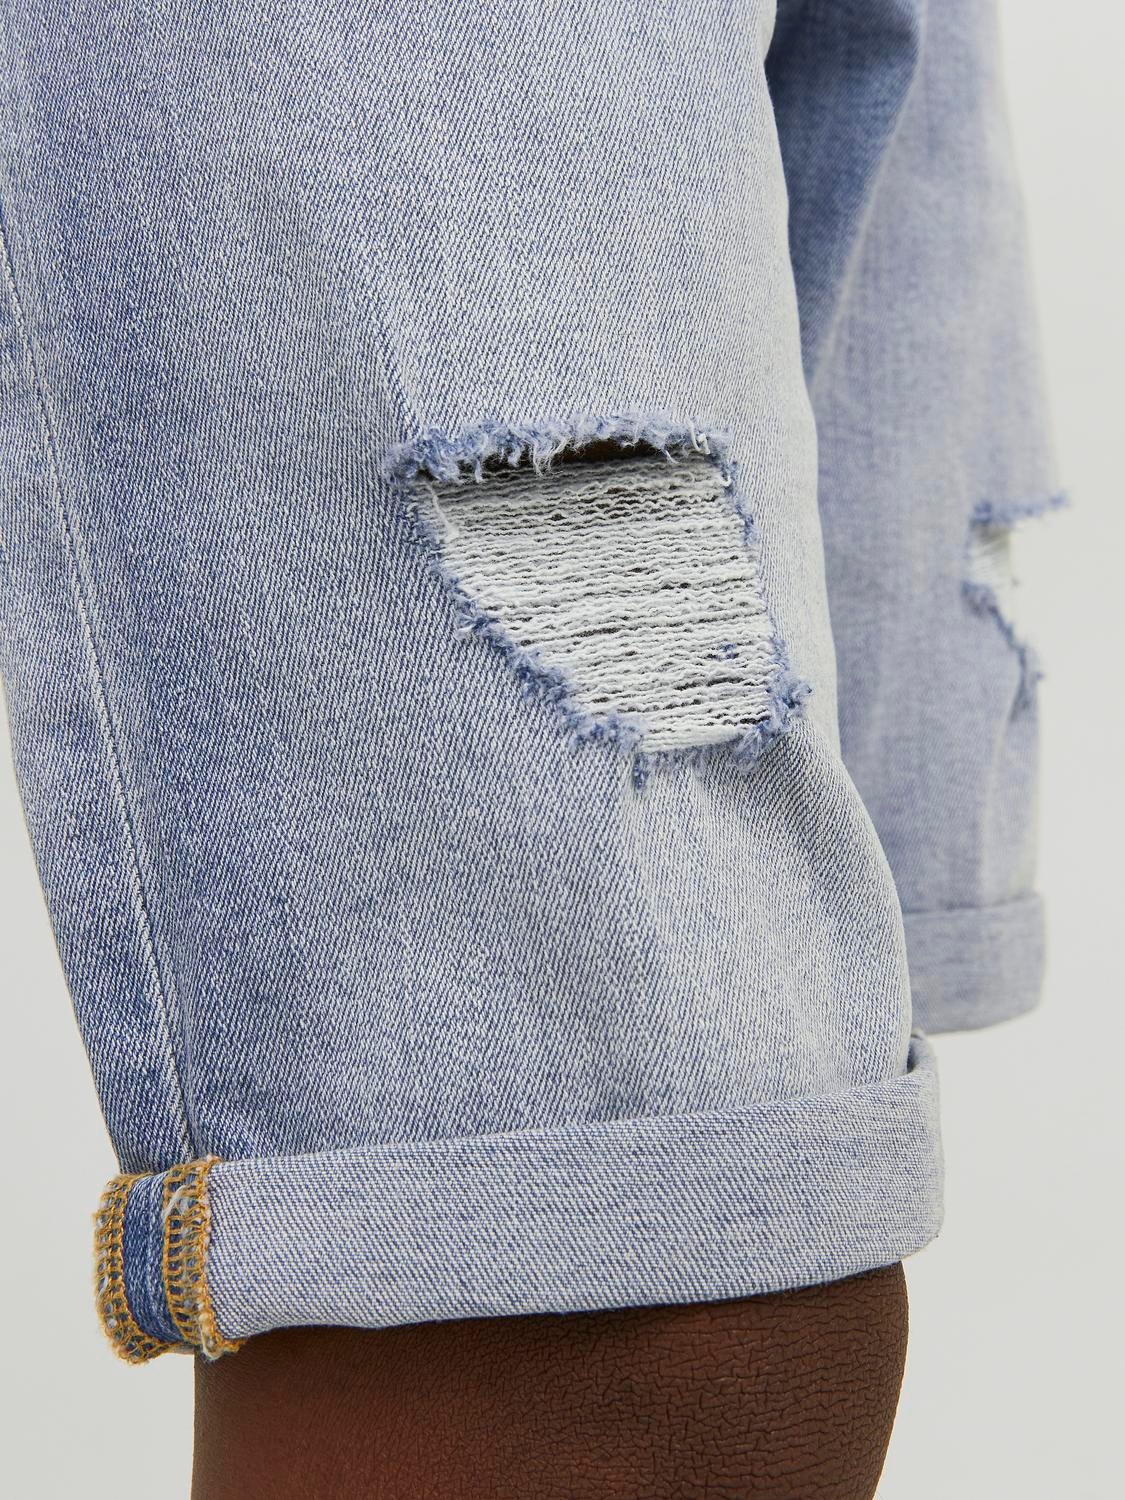 Jack & Jones Regular Fit Jeans Shorts Für jungs -Blue Denim - 12225188